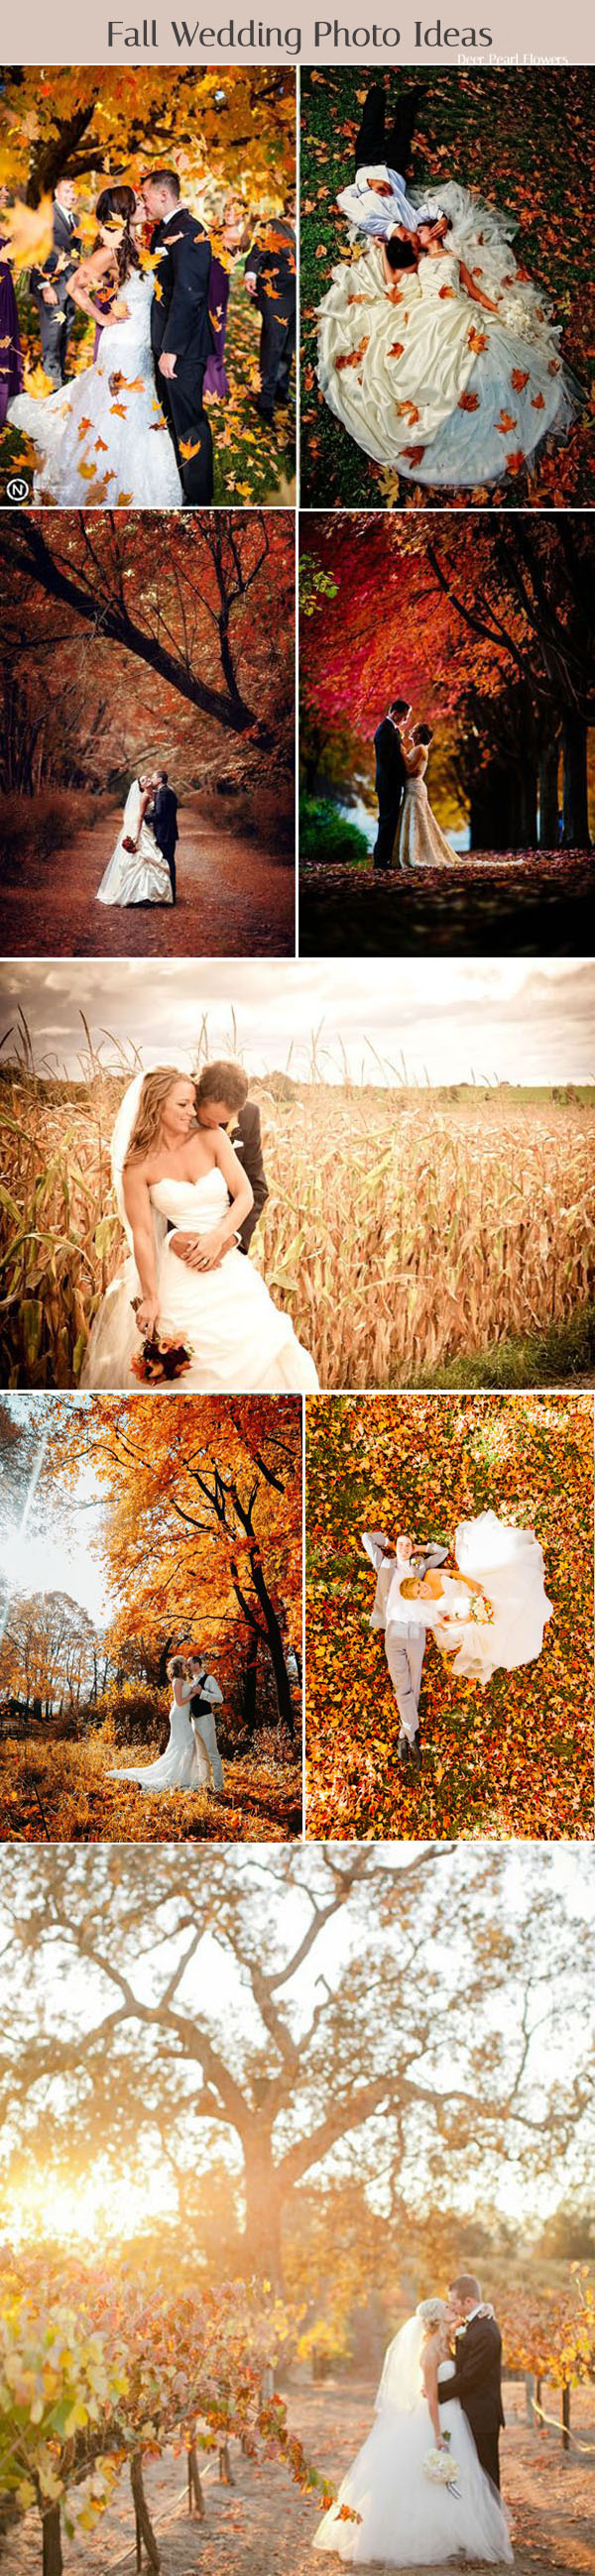 Fall wedding photo ideas